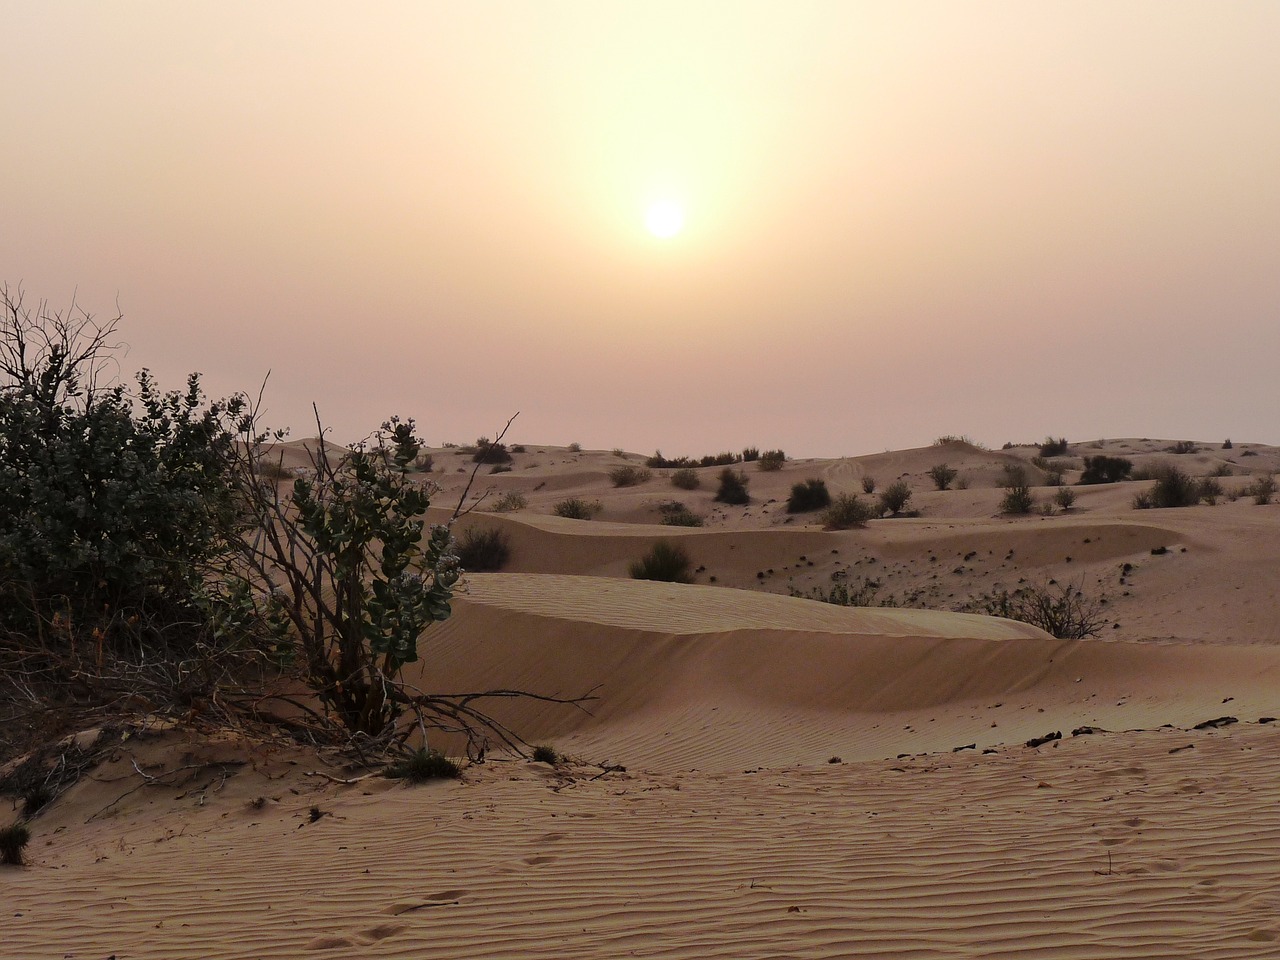 Image - desert sunset heat lighting